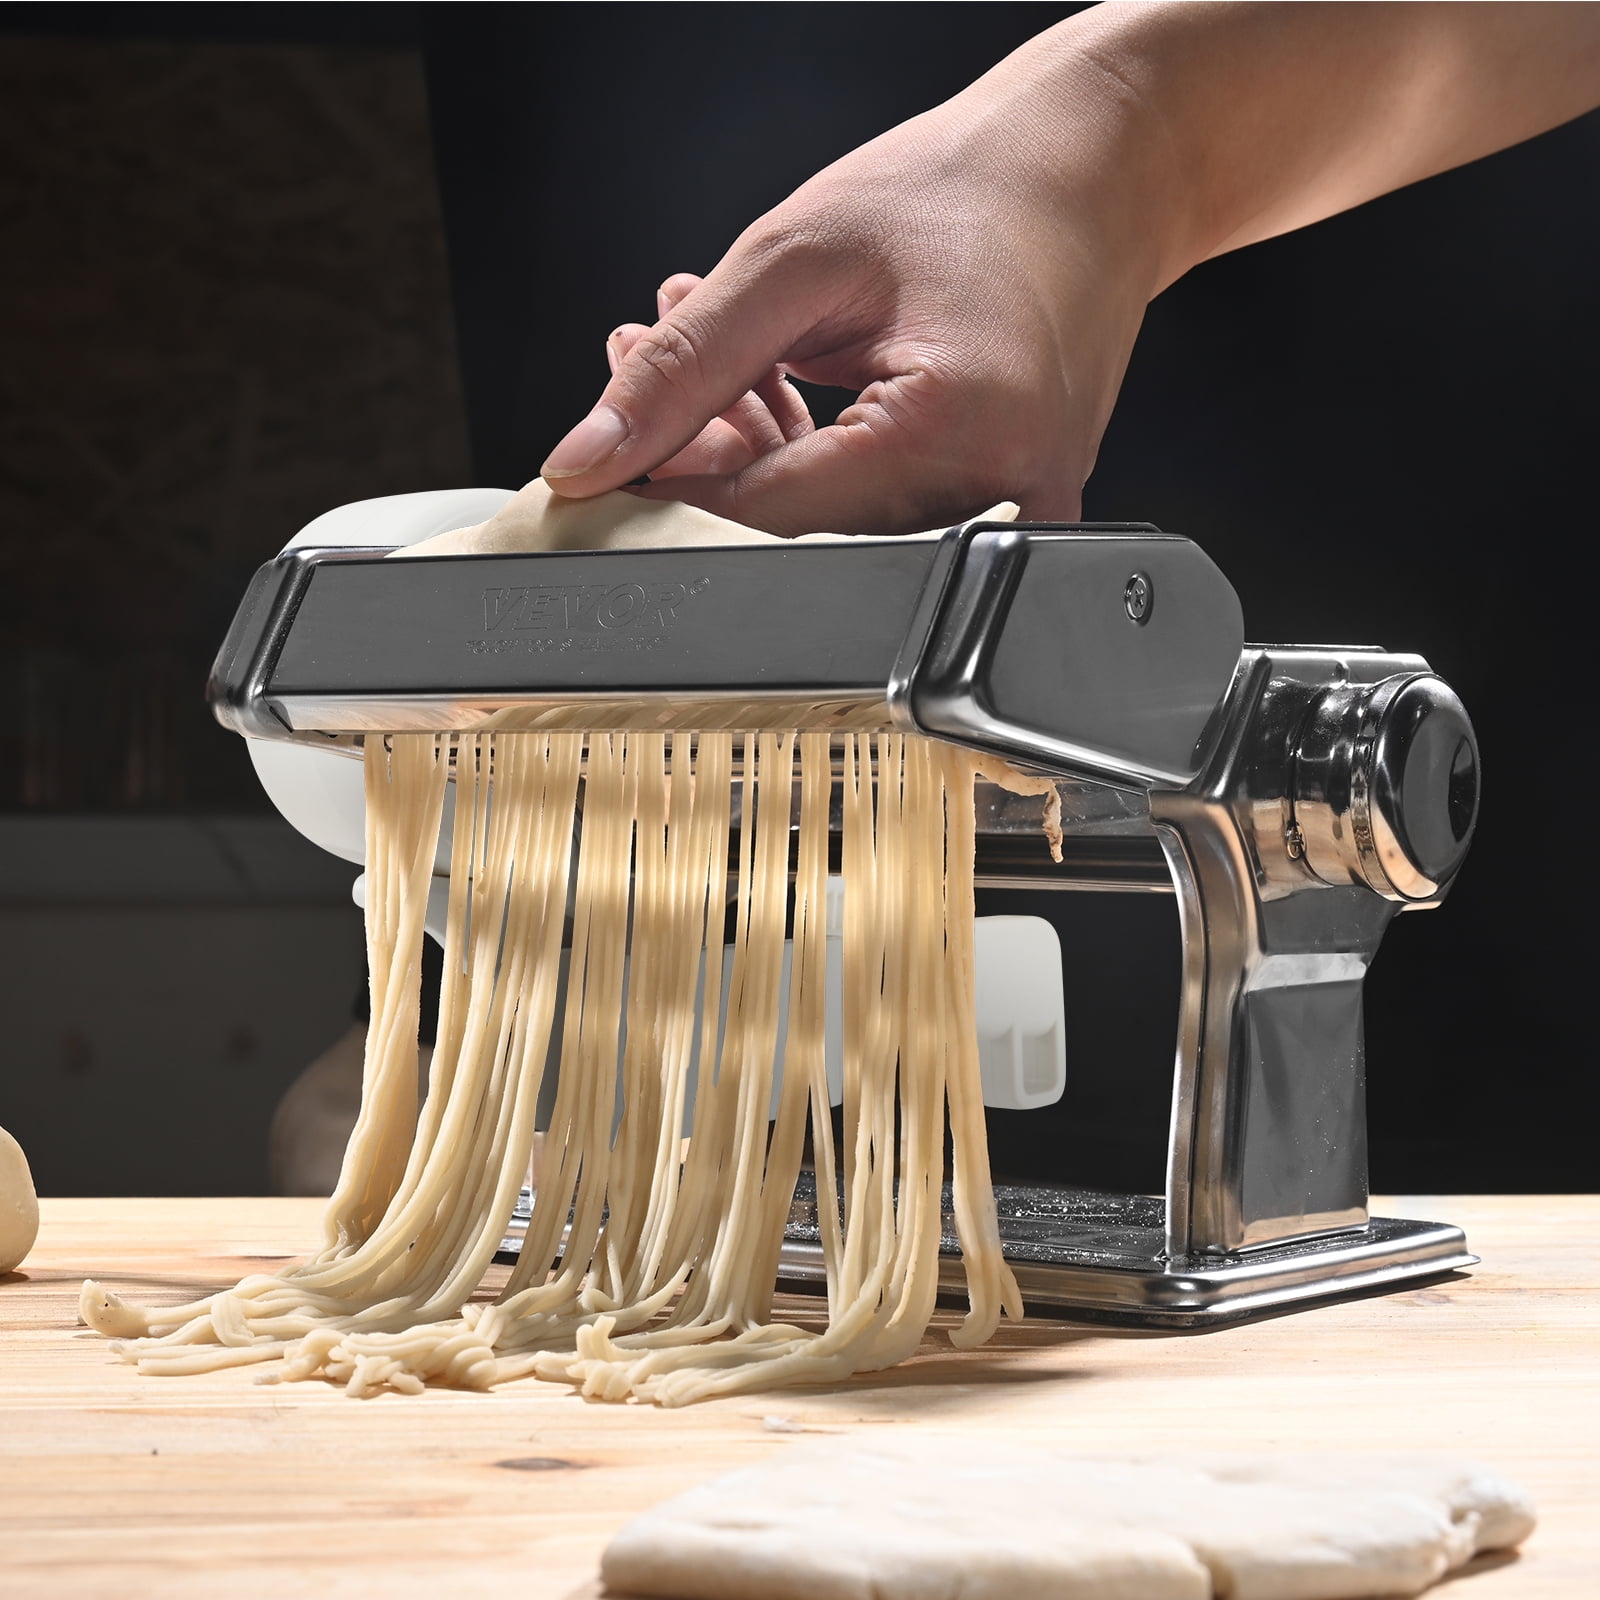 Pasta maker - Fresh pasta with the pasta maker